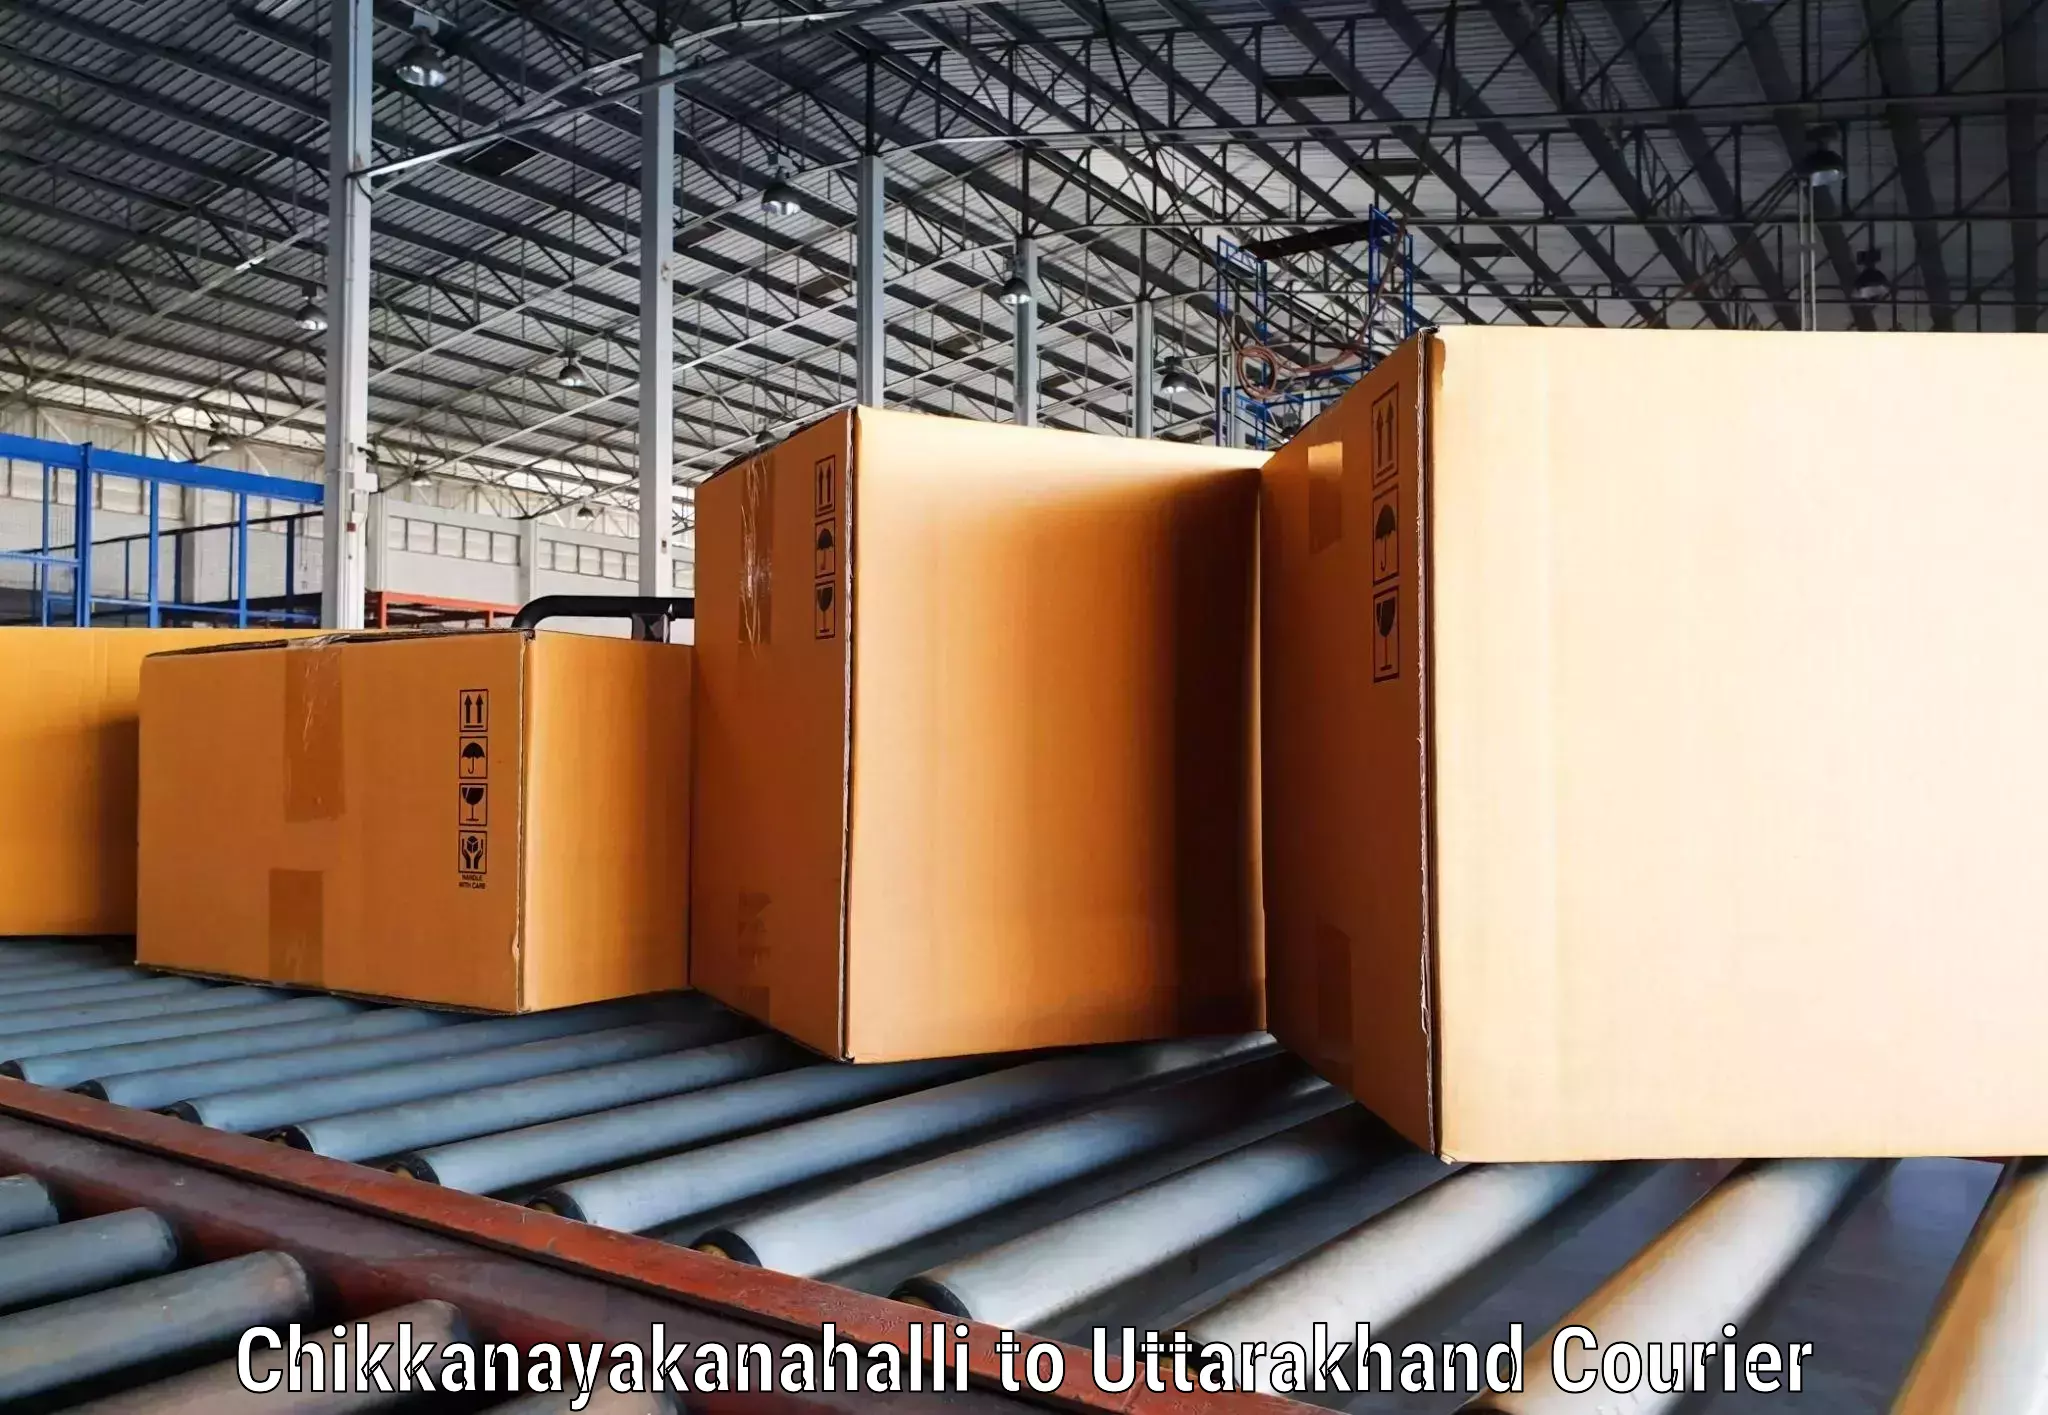 Express logistics providers Chikkanayakanahalli to Ranikhet